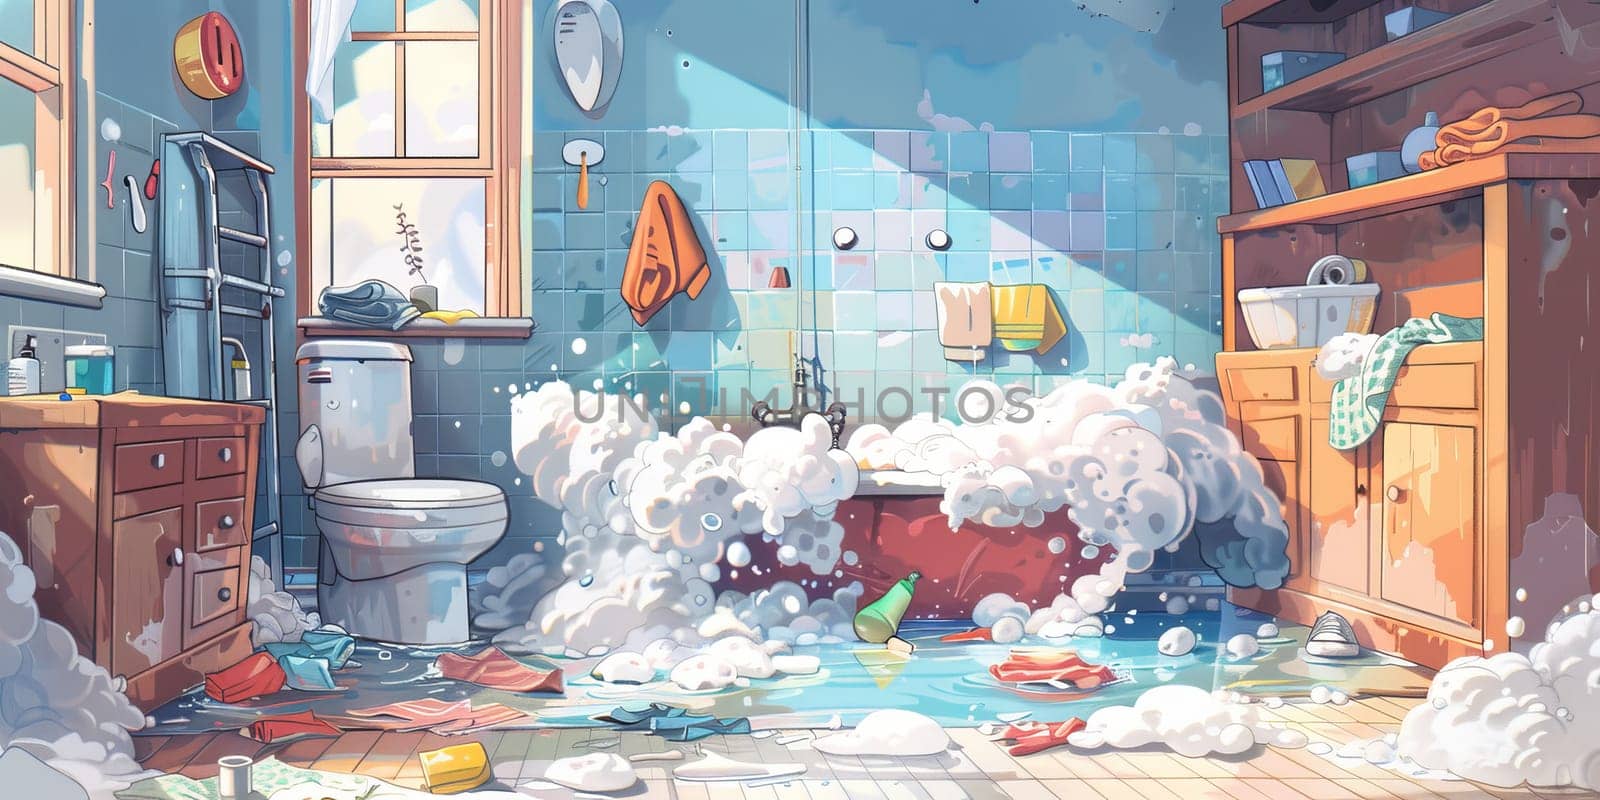 A real mess in the bathroom, heavily soiled bathroom by Kadula